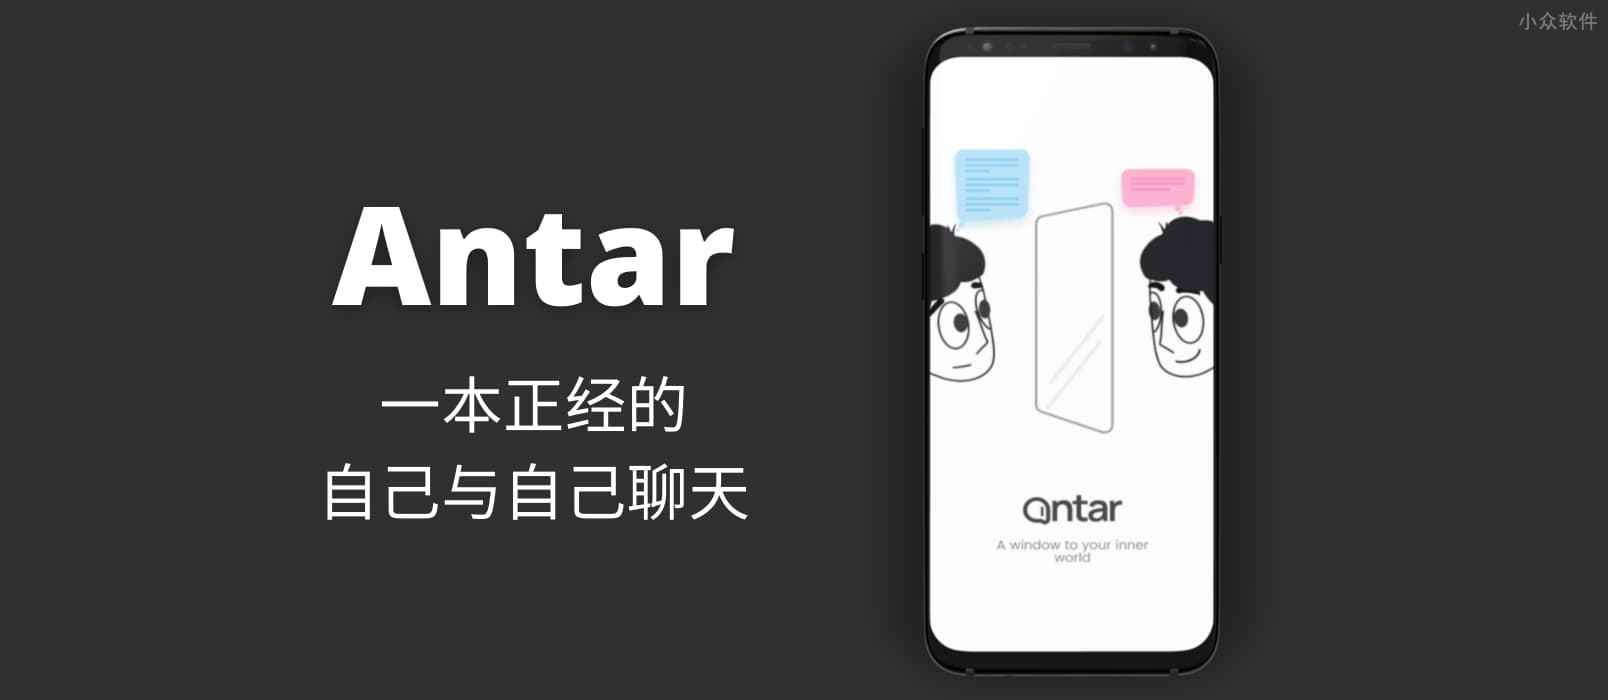 Antar – 一本正经的自己与自己聊天[Android]